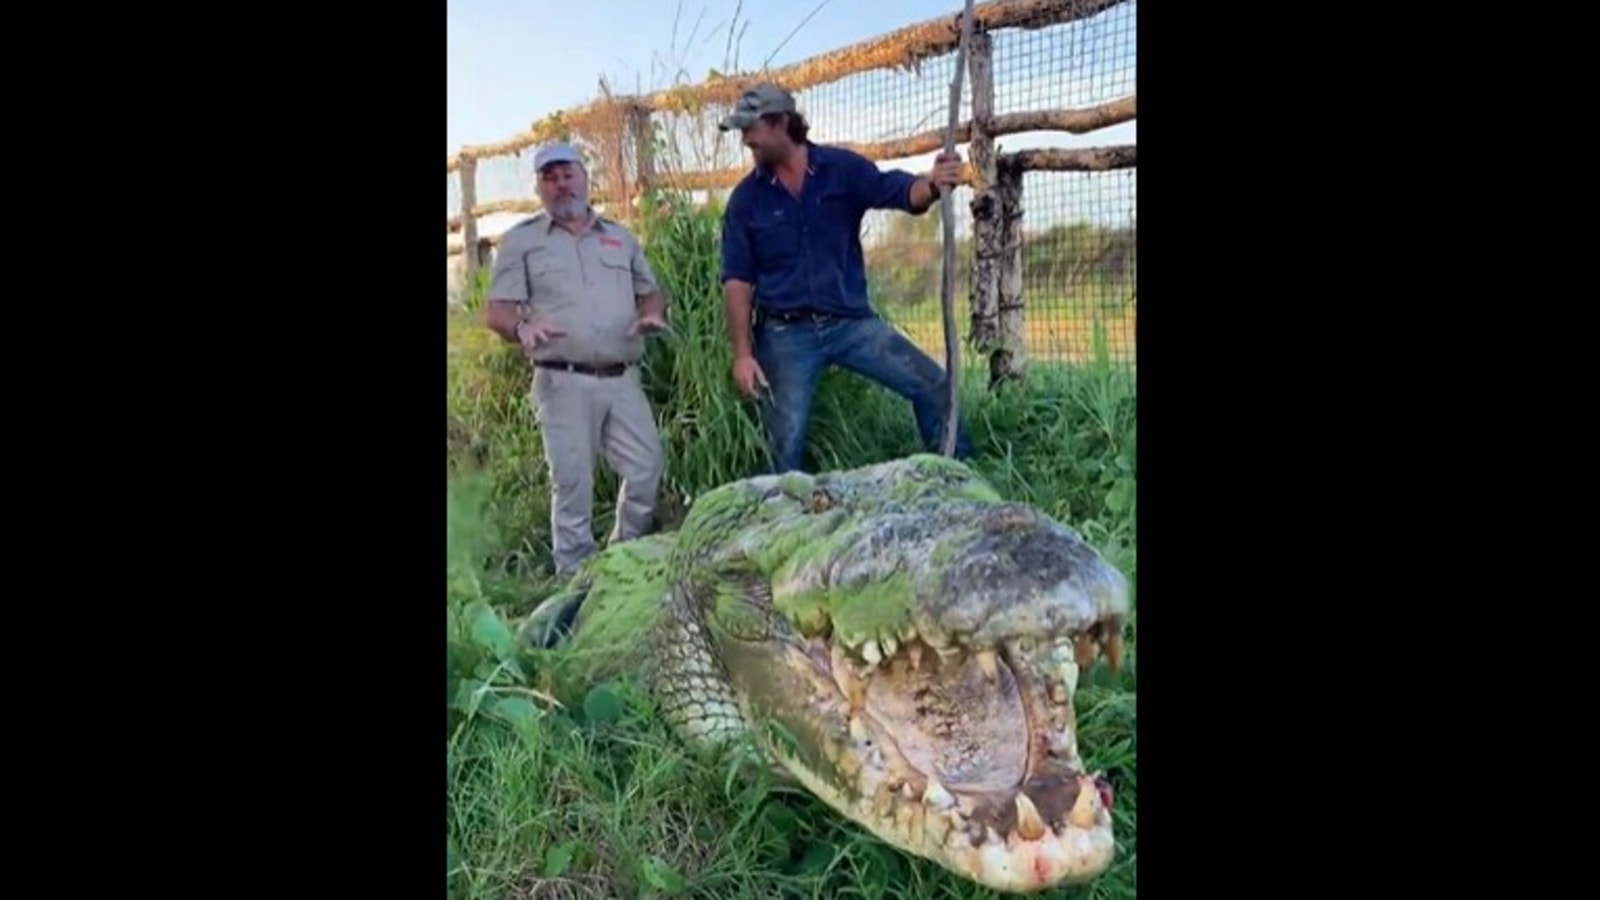 Crocodile in breeding pen and walking ar, Stock Video